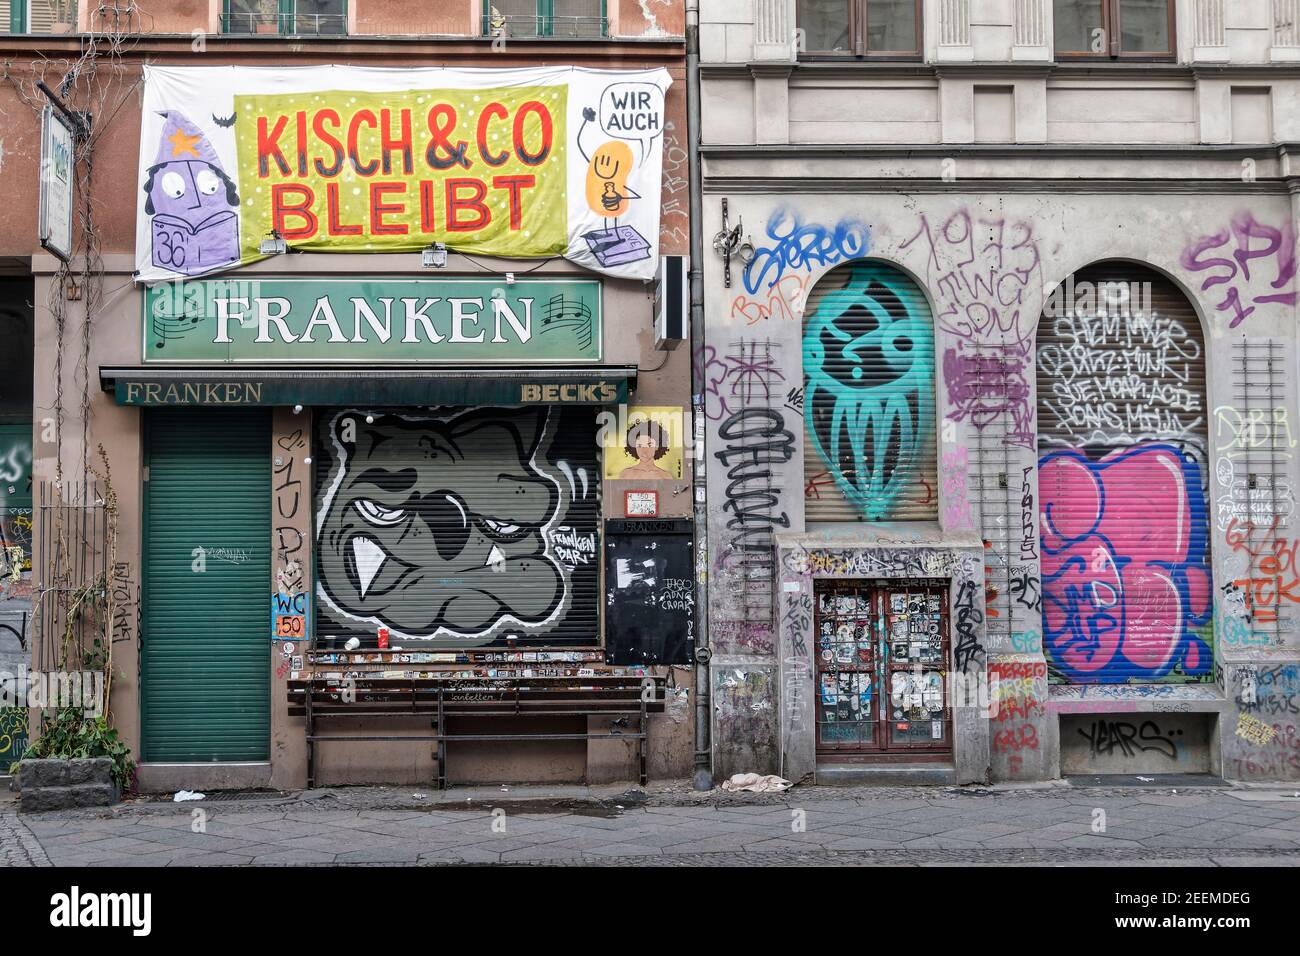 Oranienstrasse, Kreuzberg, Lockdown, Januar 2021, geschlossene Bar Franken, Protestplakat gegen Raummung vom Buchhandel Kisch& Co Stockfoto